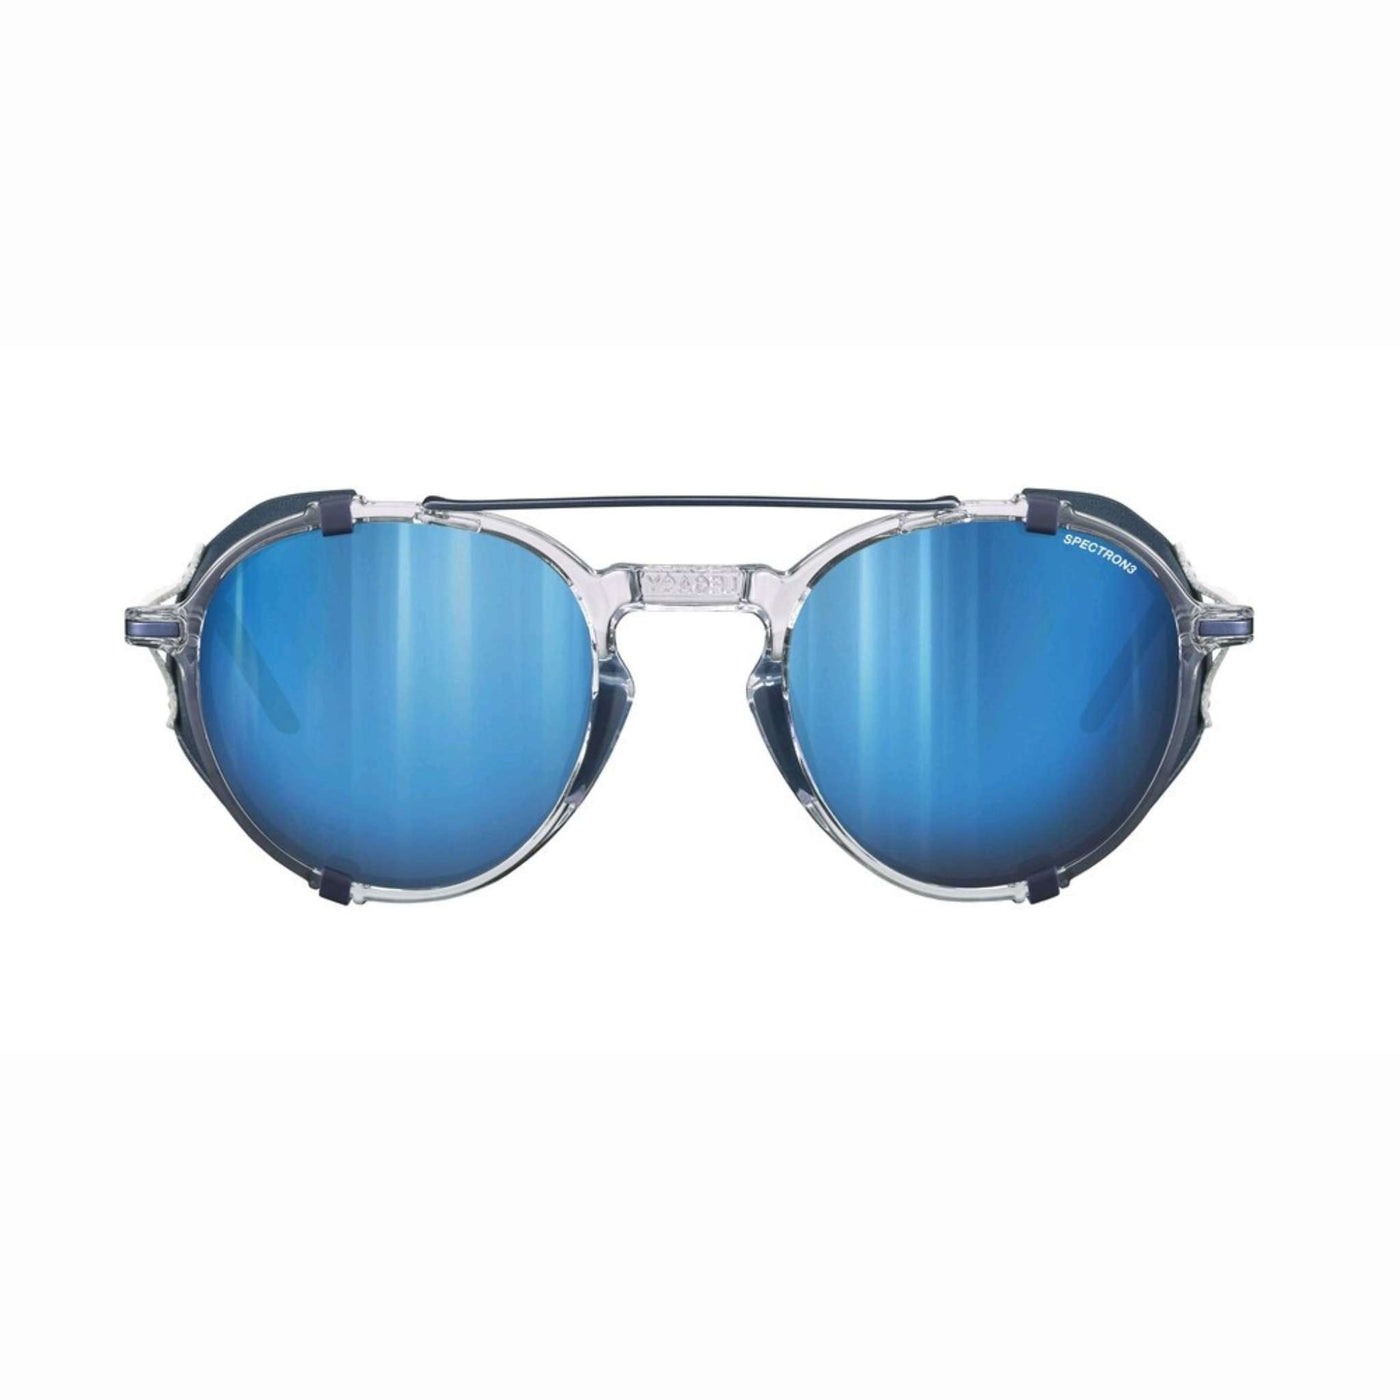 Julbo Legacy Cristal/Shields Blue Sunglasses - Spectron 3 CF Lens | Performance Sunglasses | Further Faster Christchurch NZ